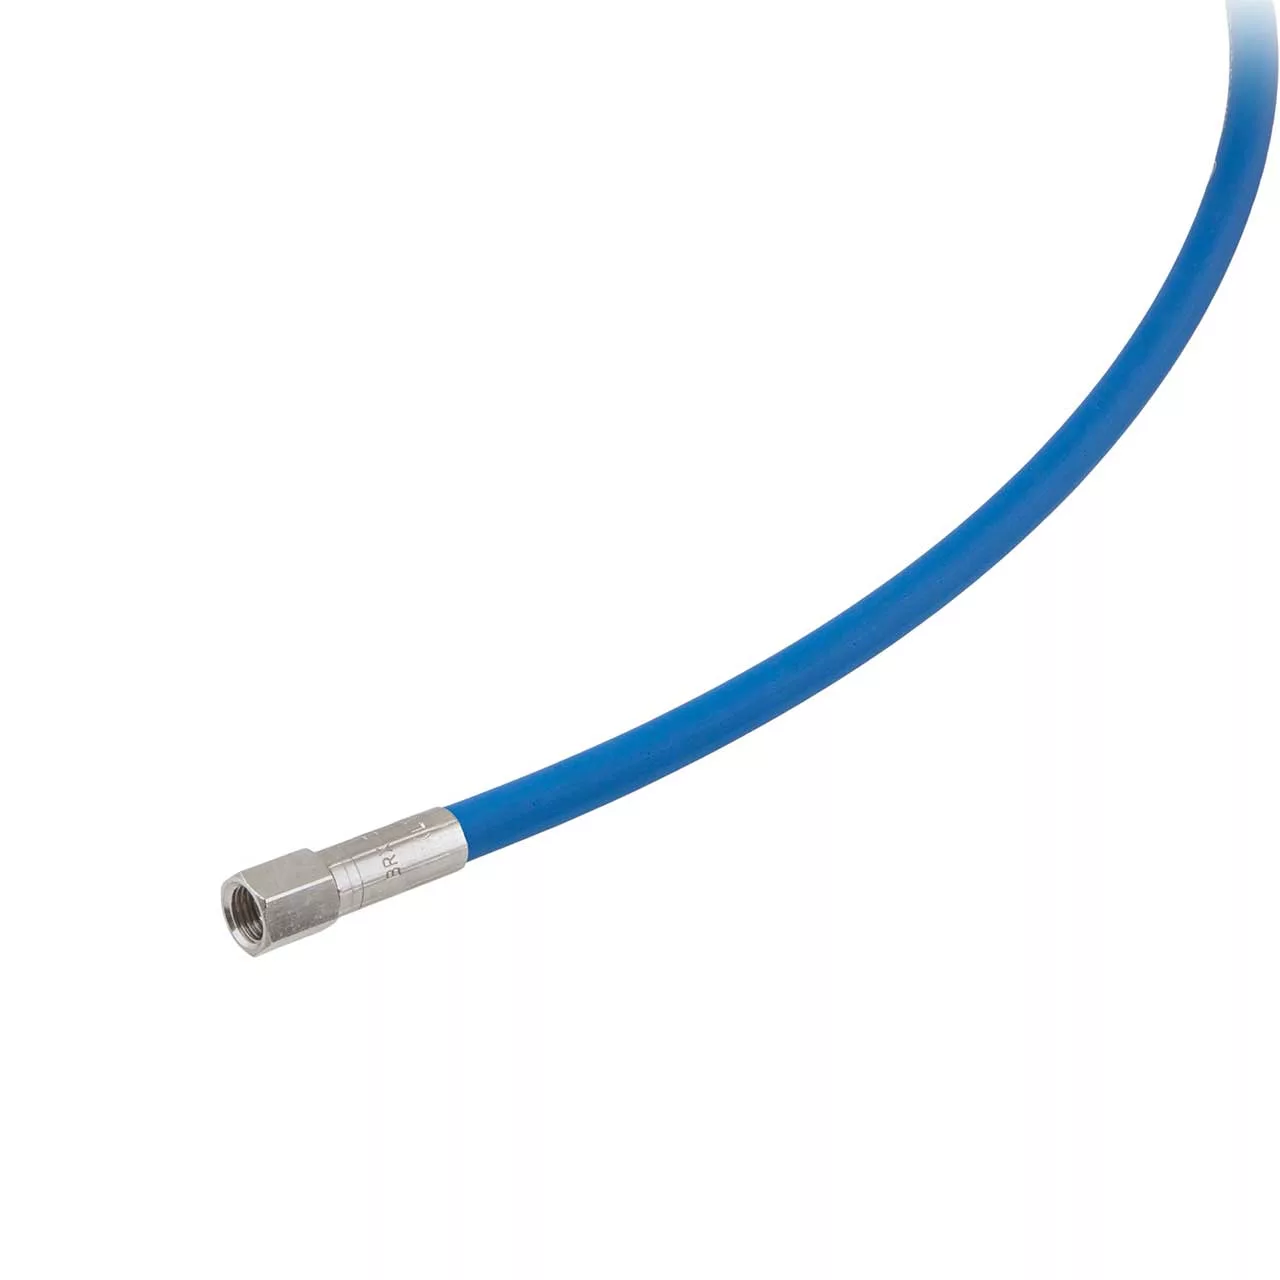 Tecline HP hose 0.8 m rubber blue 14030-153